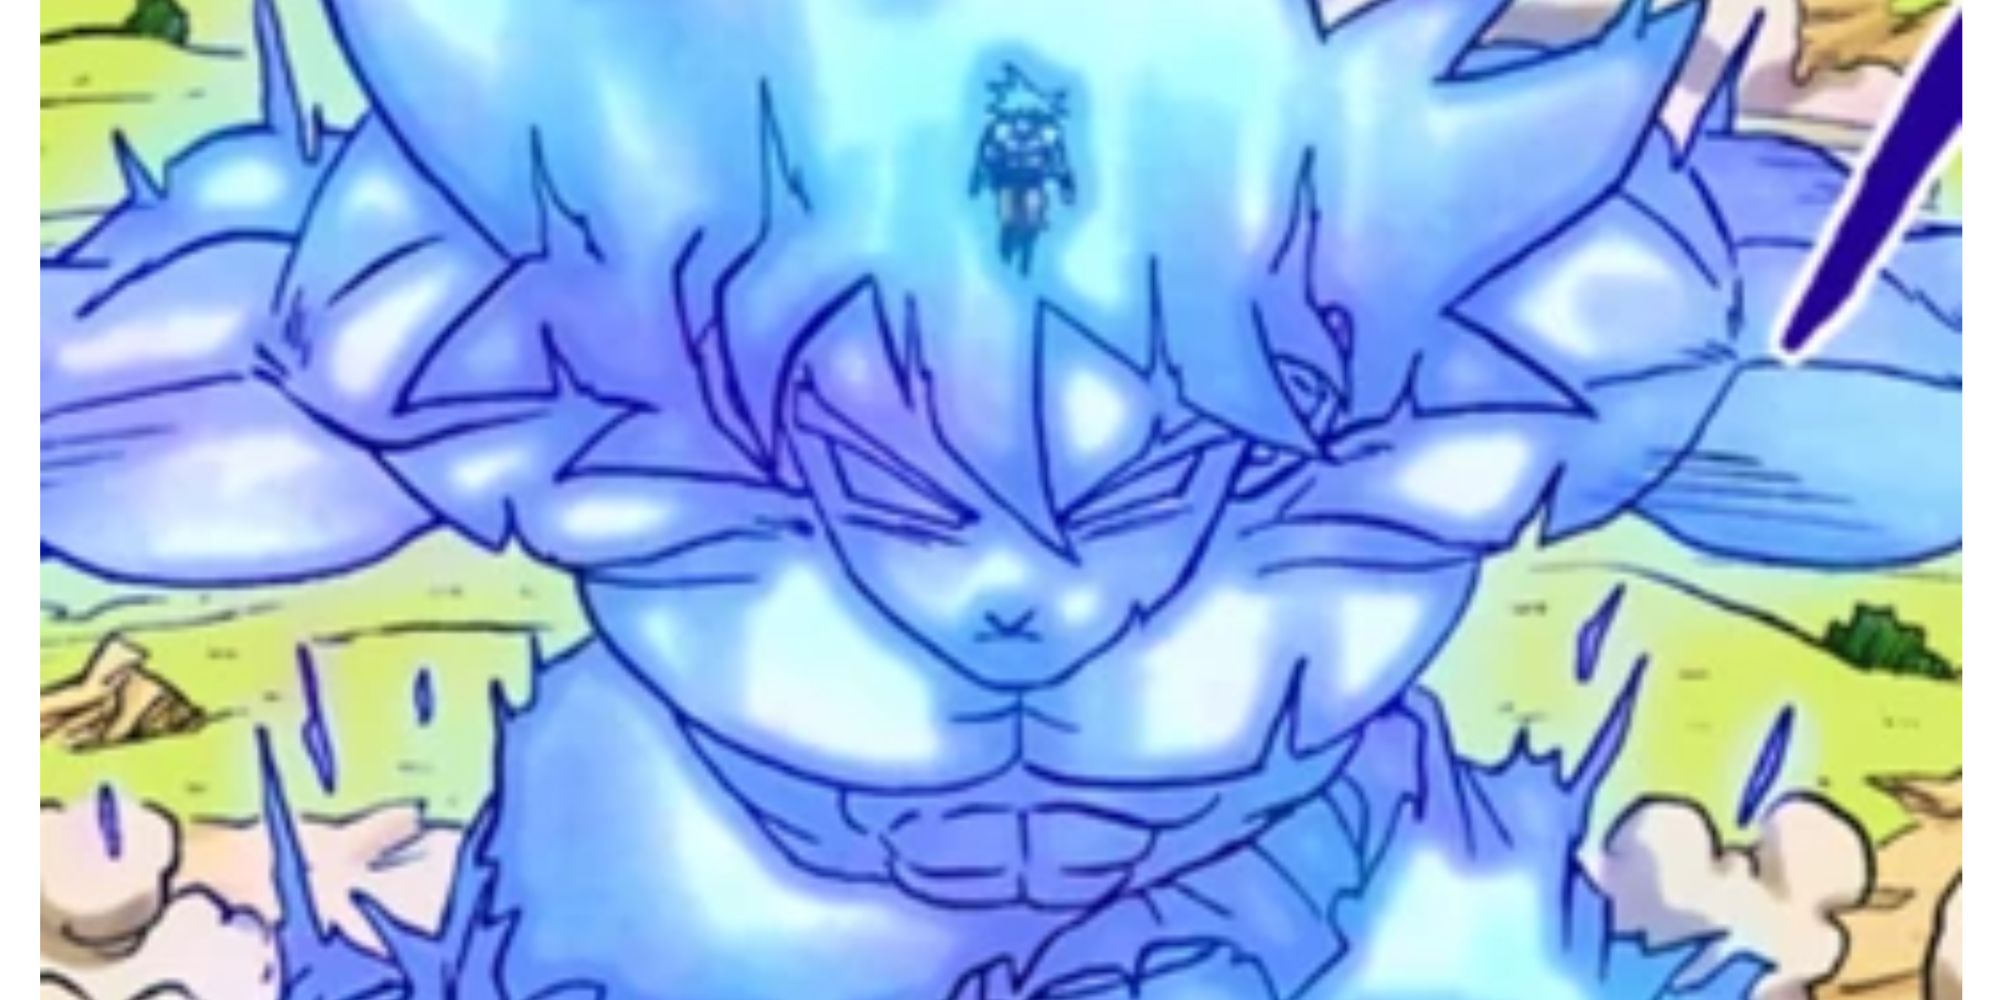 Goku's Divine Ki Giant Battle Avatar as seen in Dragon Ball Super